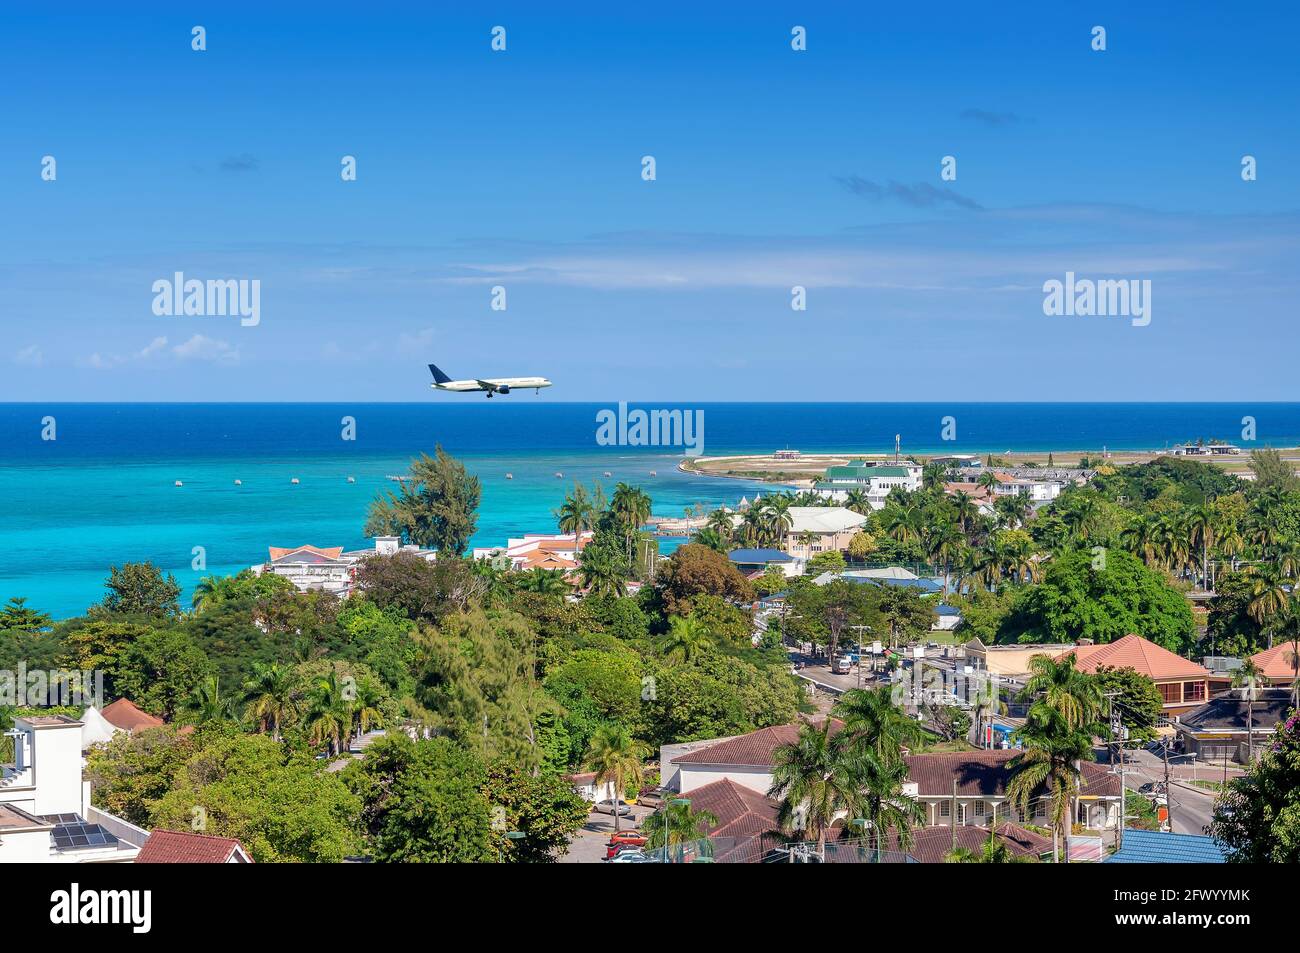 Aerial view of Jamaica Caribbean island Stock Photo